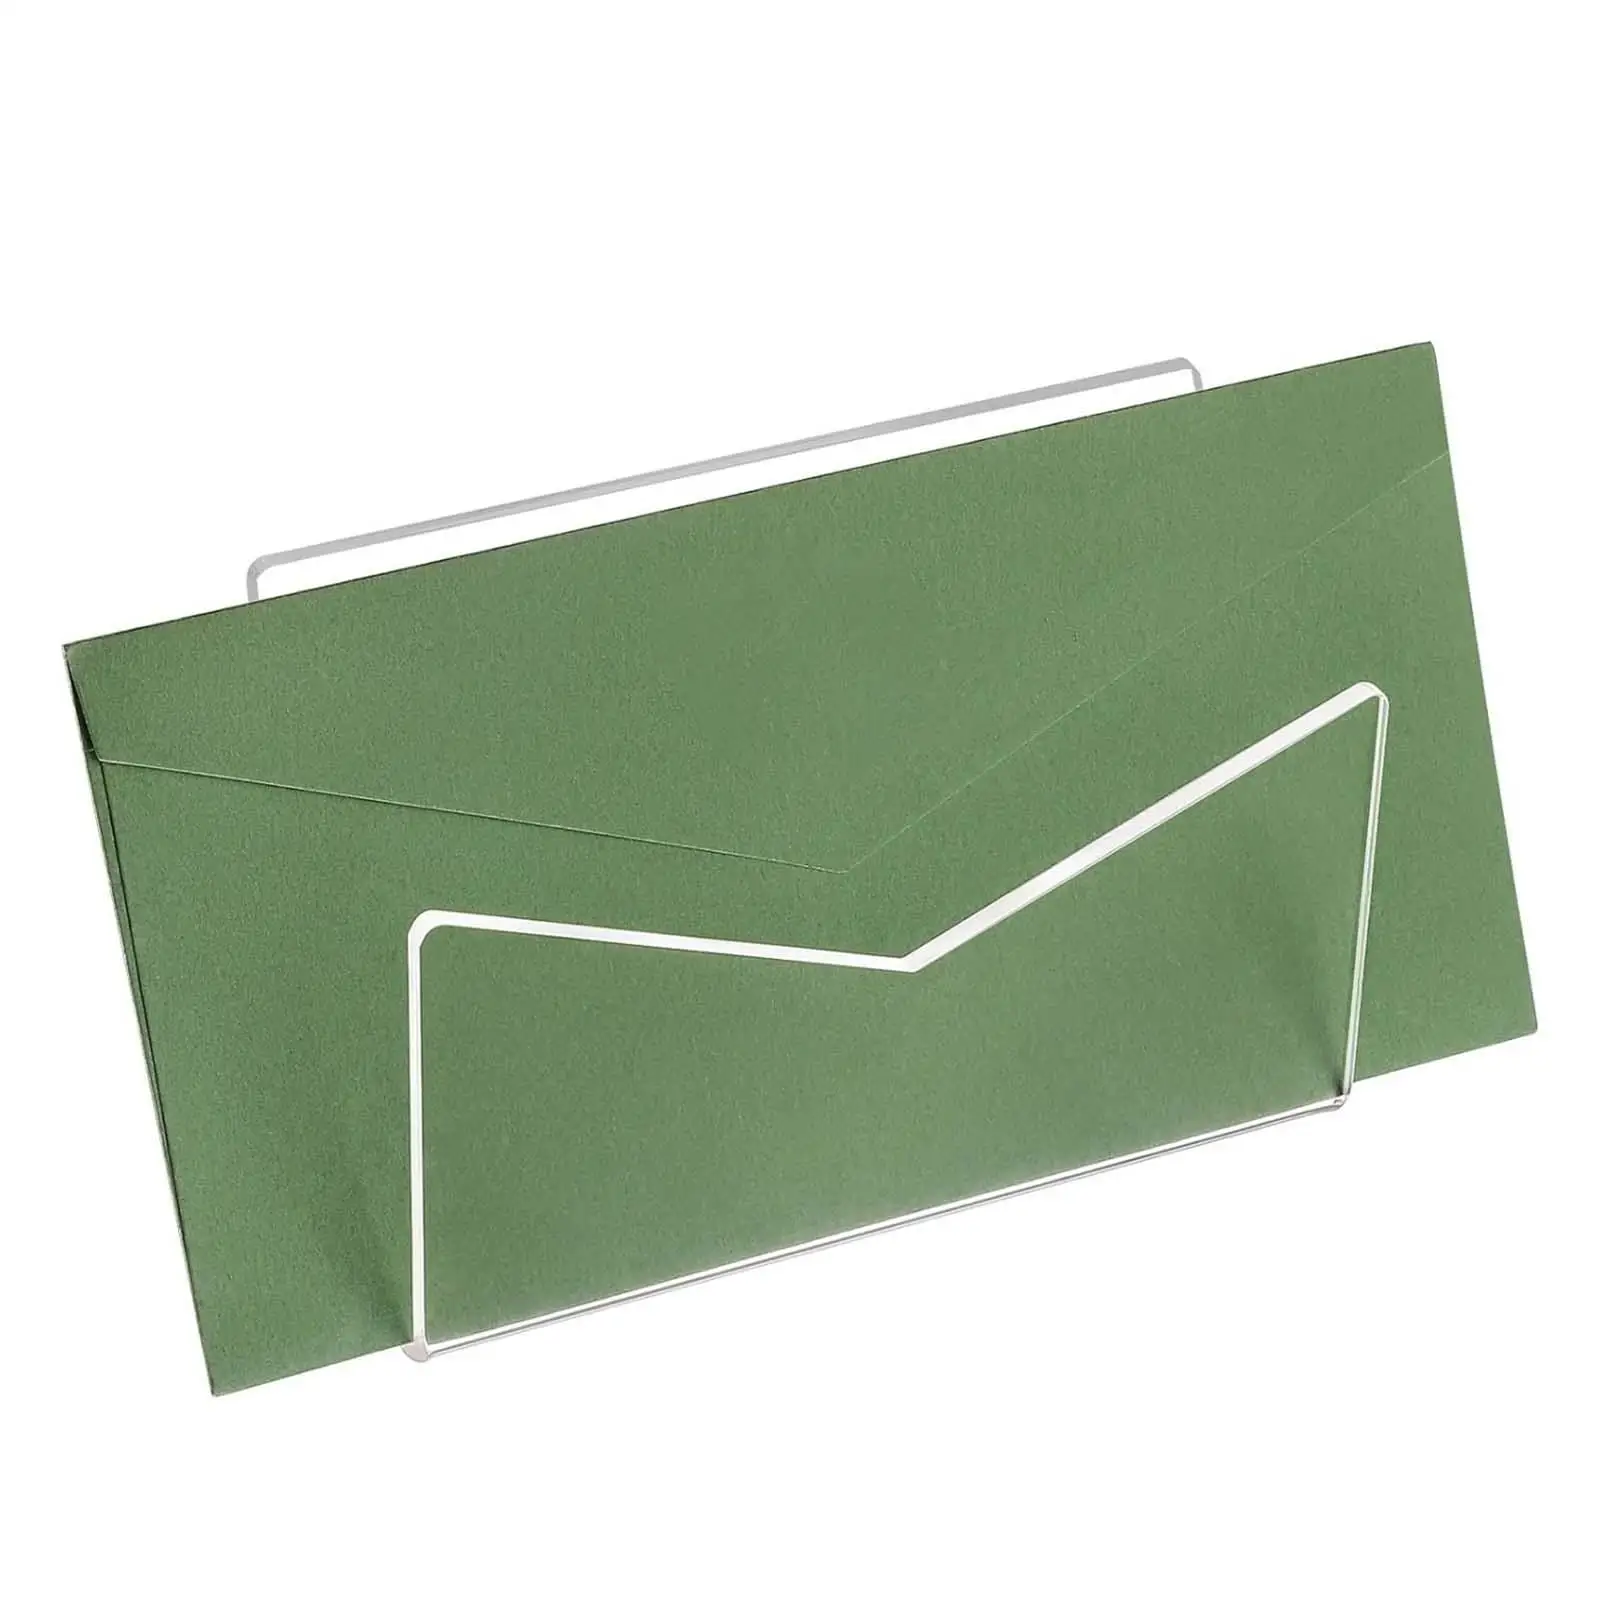 Desk Letter Holder Notebook Invitation Envelope Holder Display Clear Acrylic Organization Mail Holder Organizer for Office Home